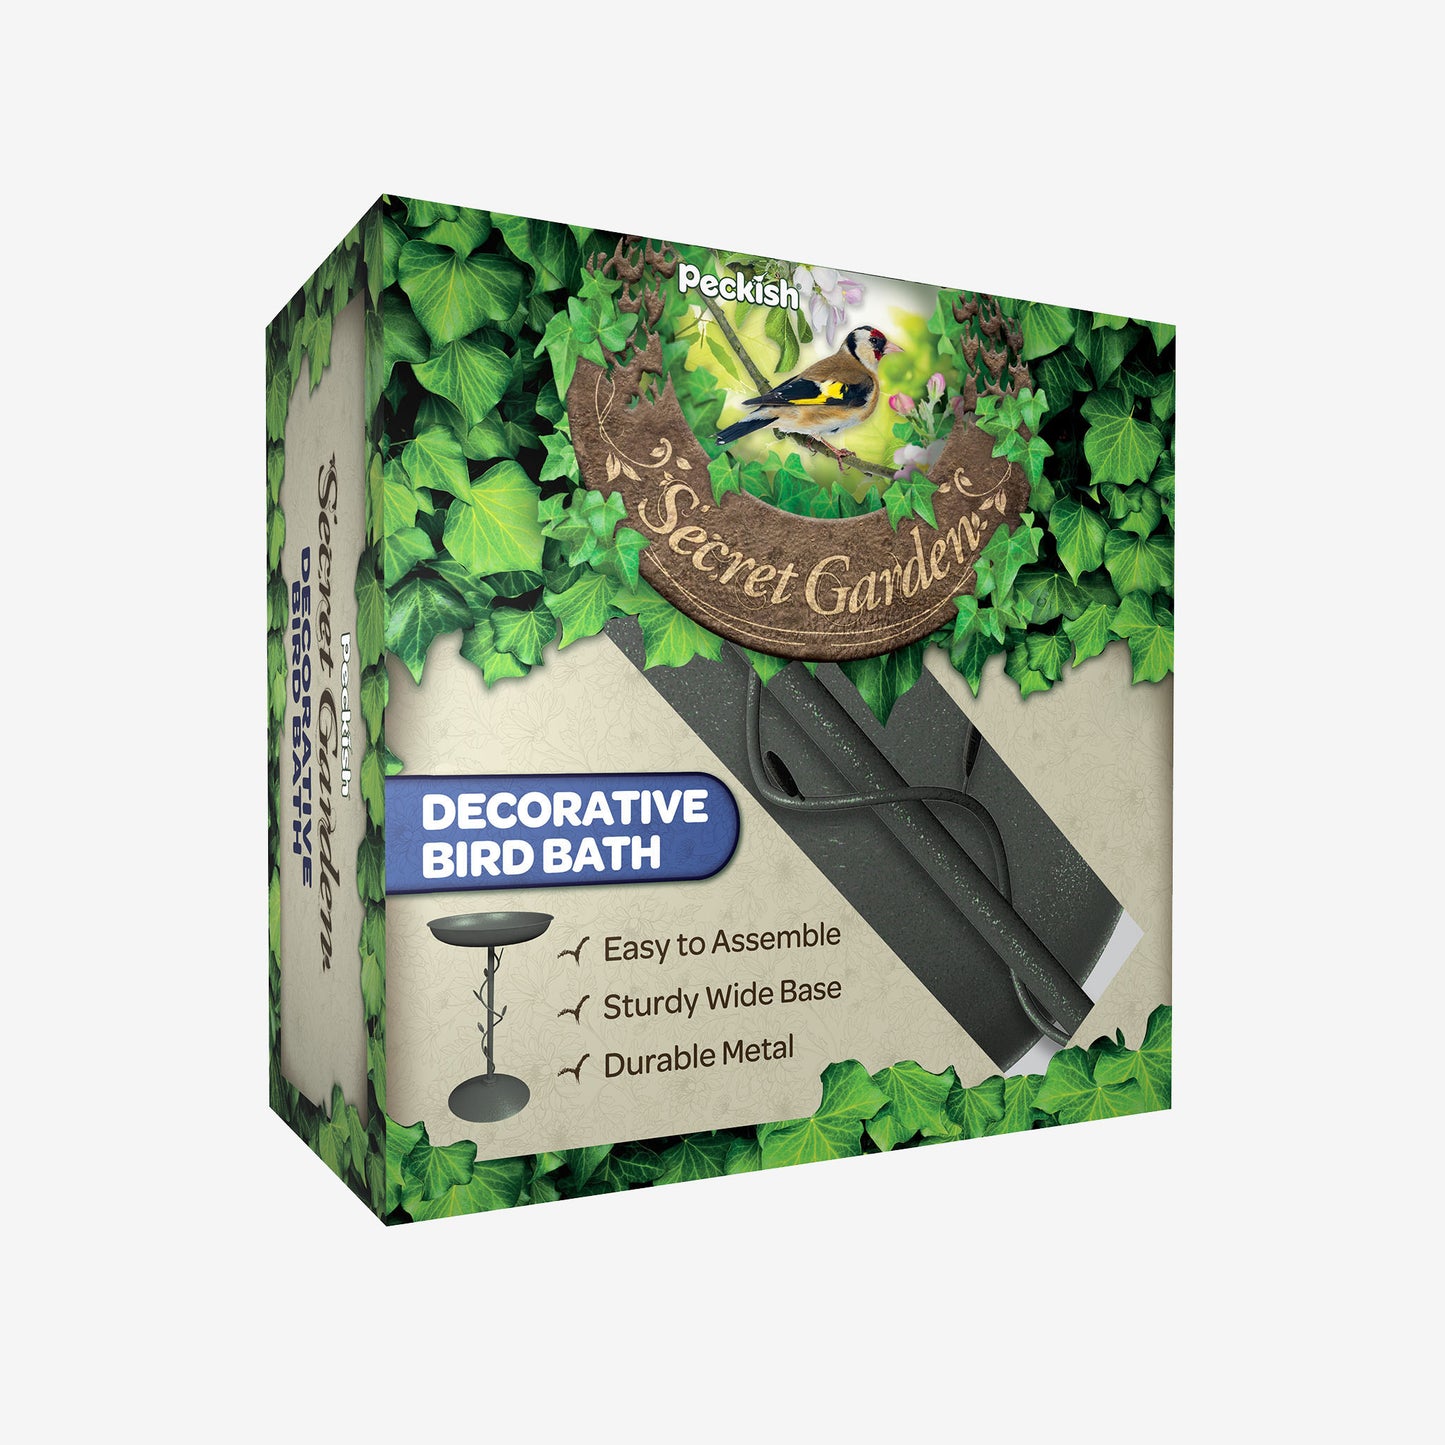 Peckish Secret Garden Bird Bath in packaging box